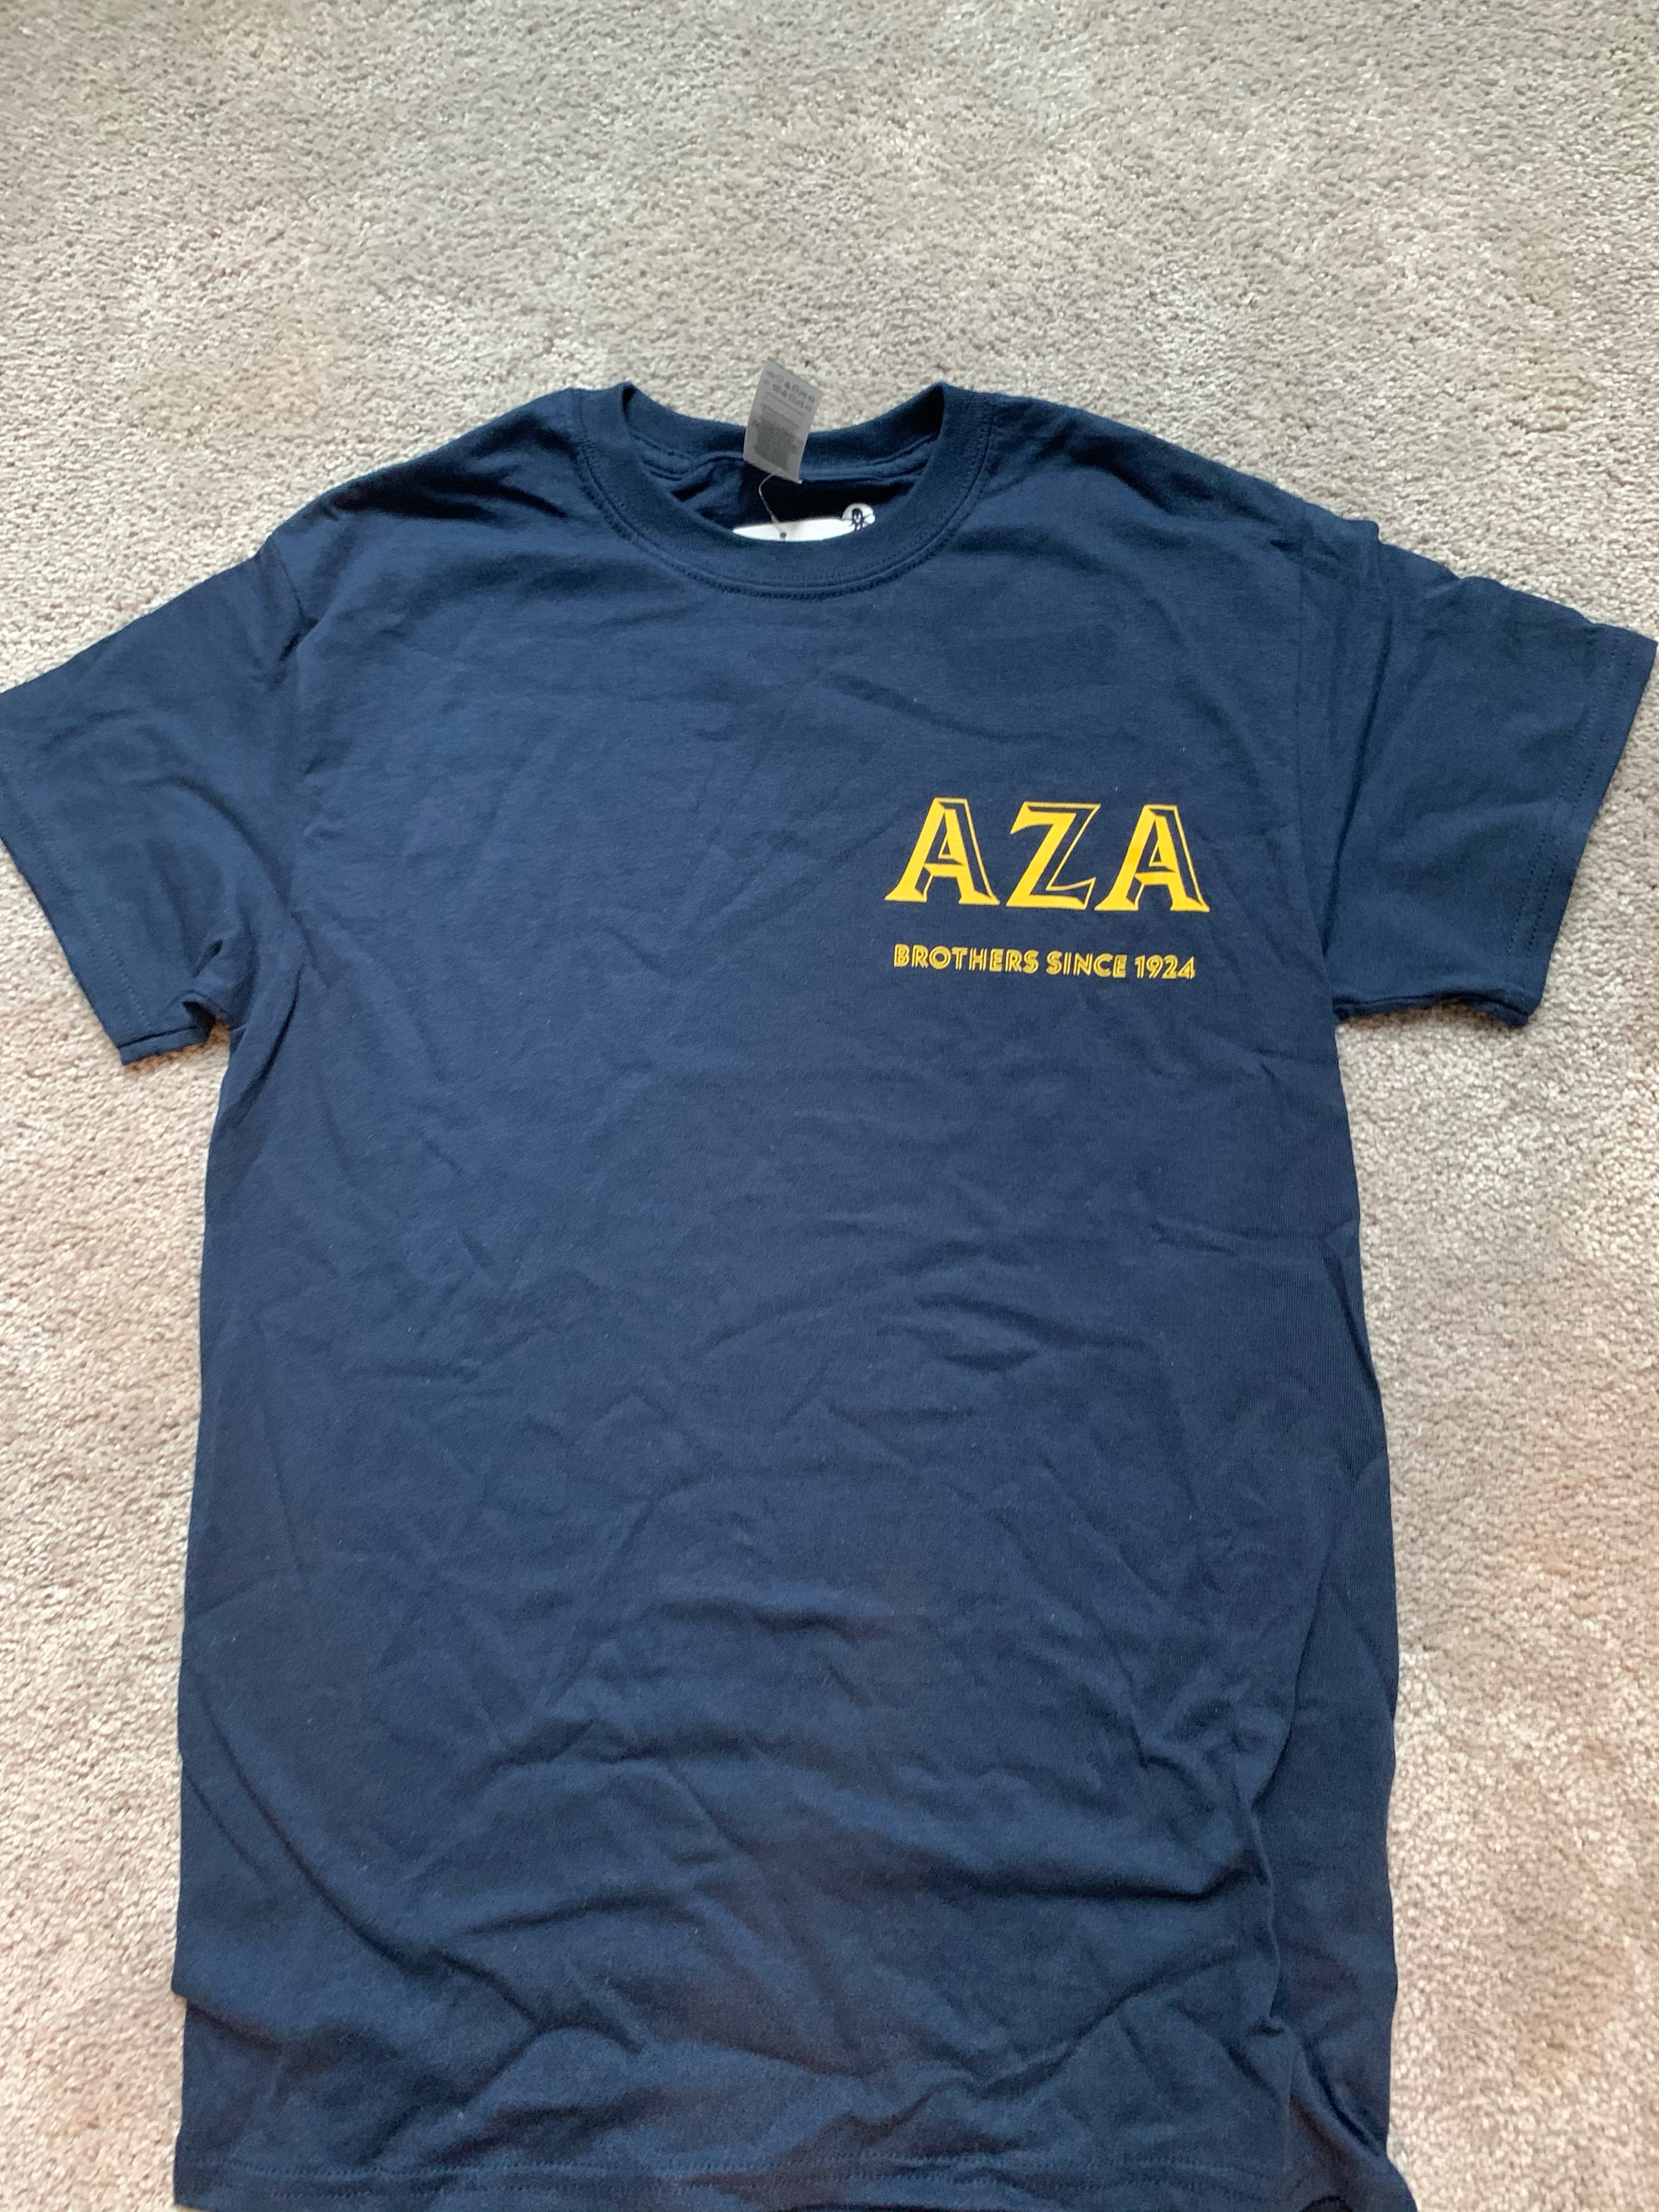 AZA Brotherhood Shirt image